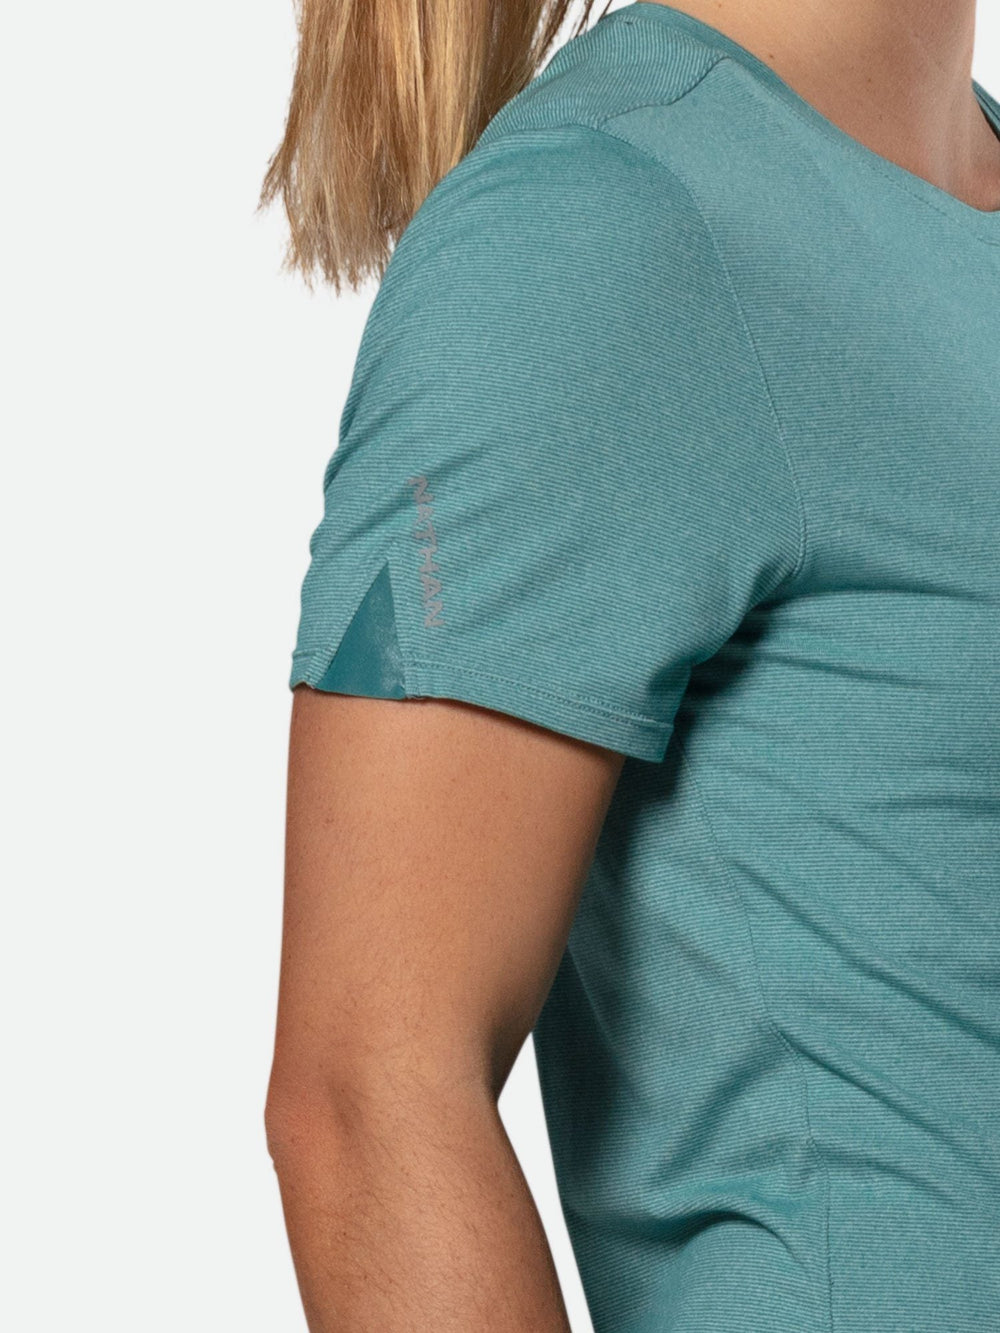 Women's Reflective Long Sleeve Shirt - Didn't Train